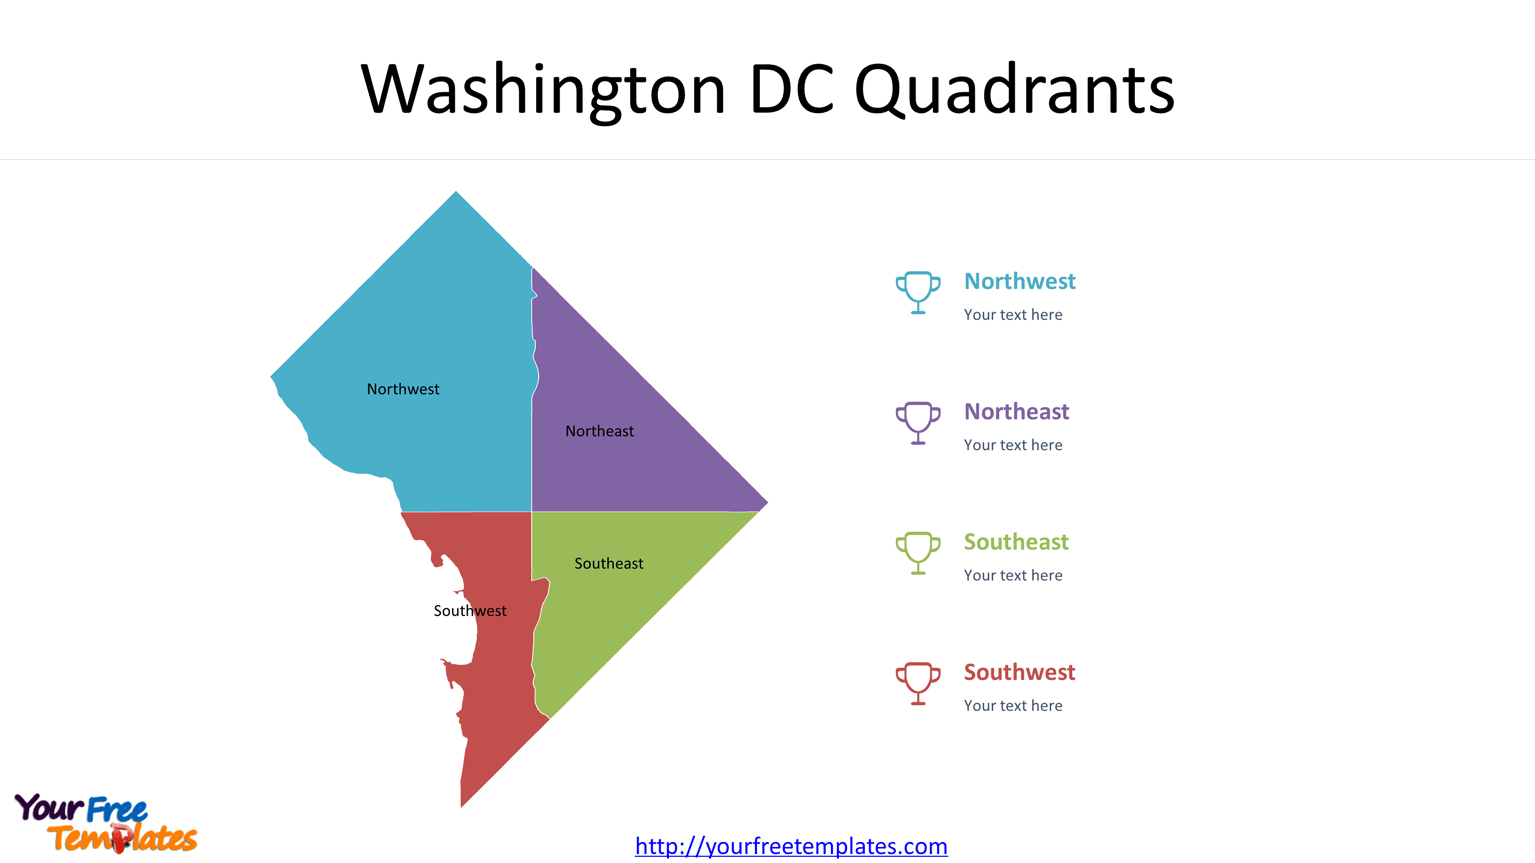 Washington DC Quadrants